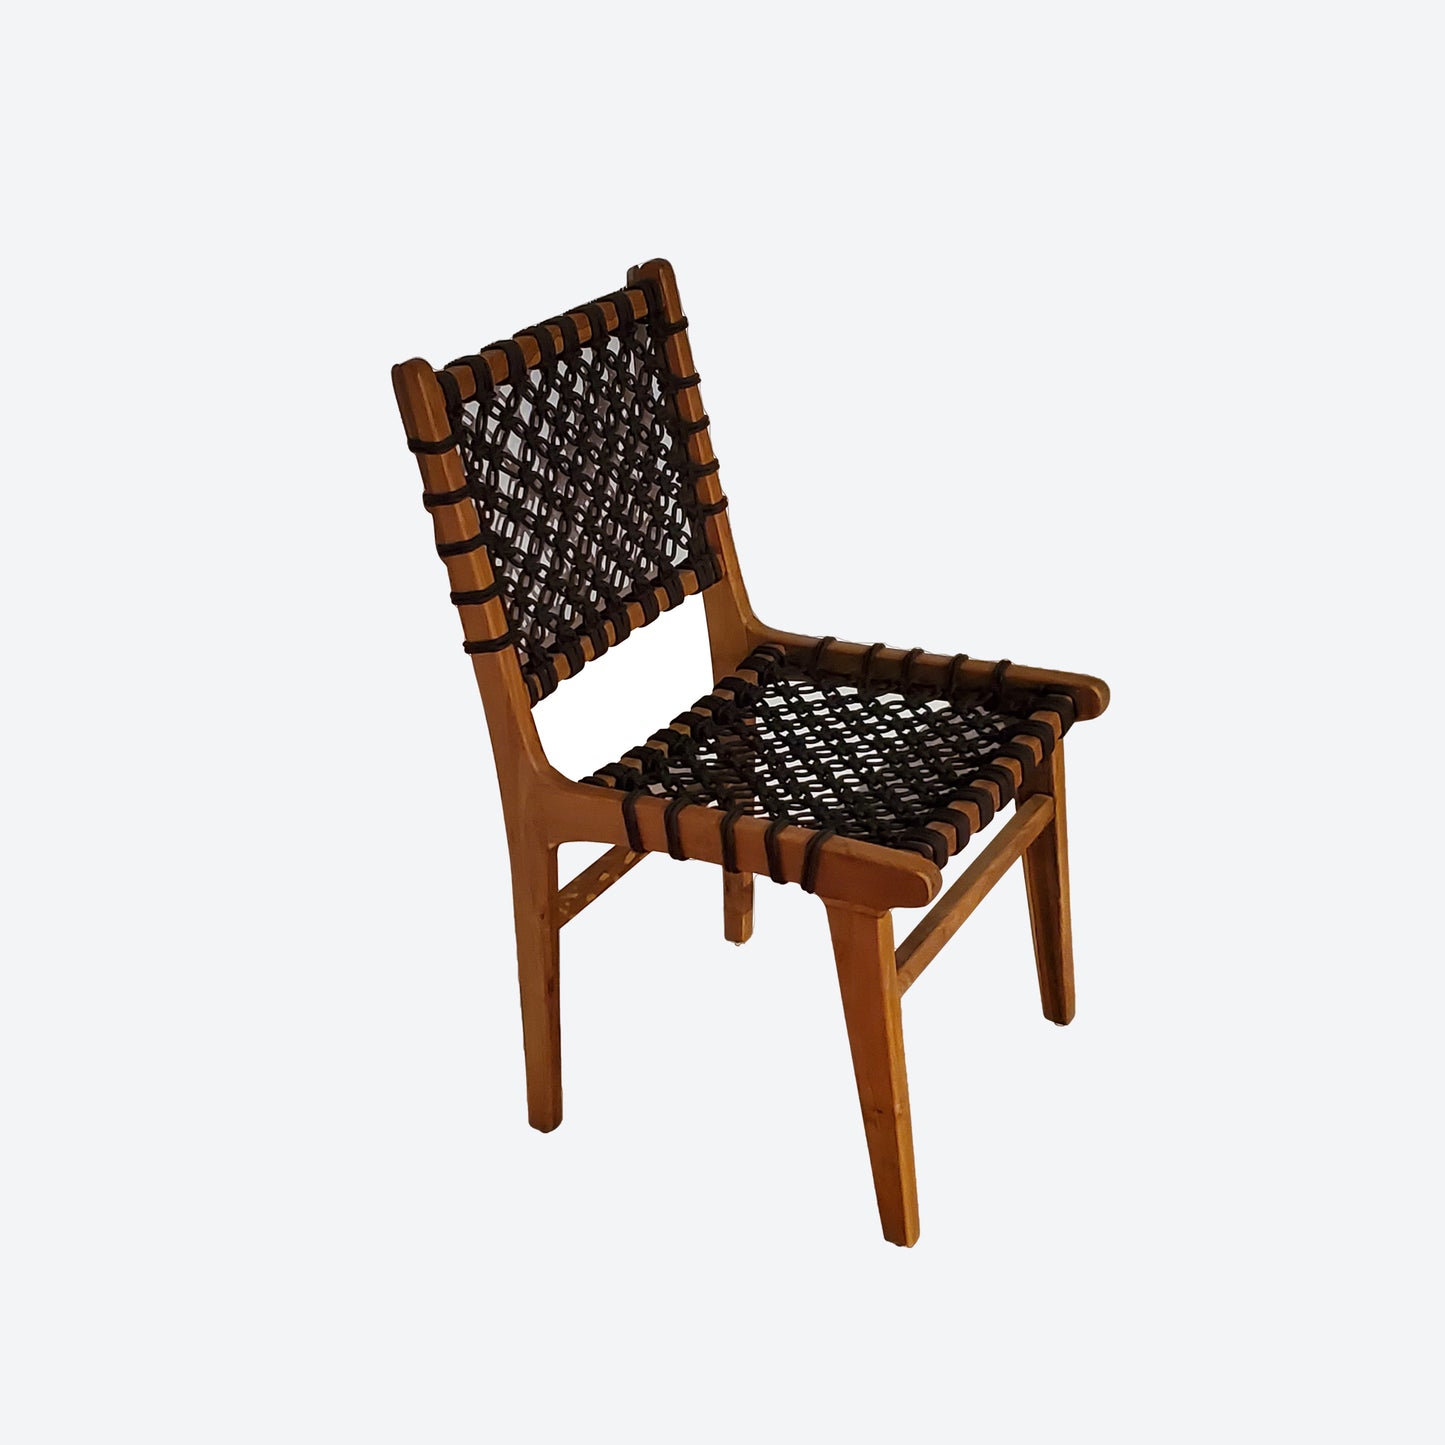 Black Dyed Rattan Teak Dining Chair -SK (SKU 1163)